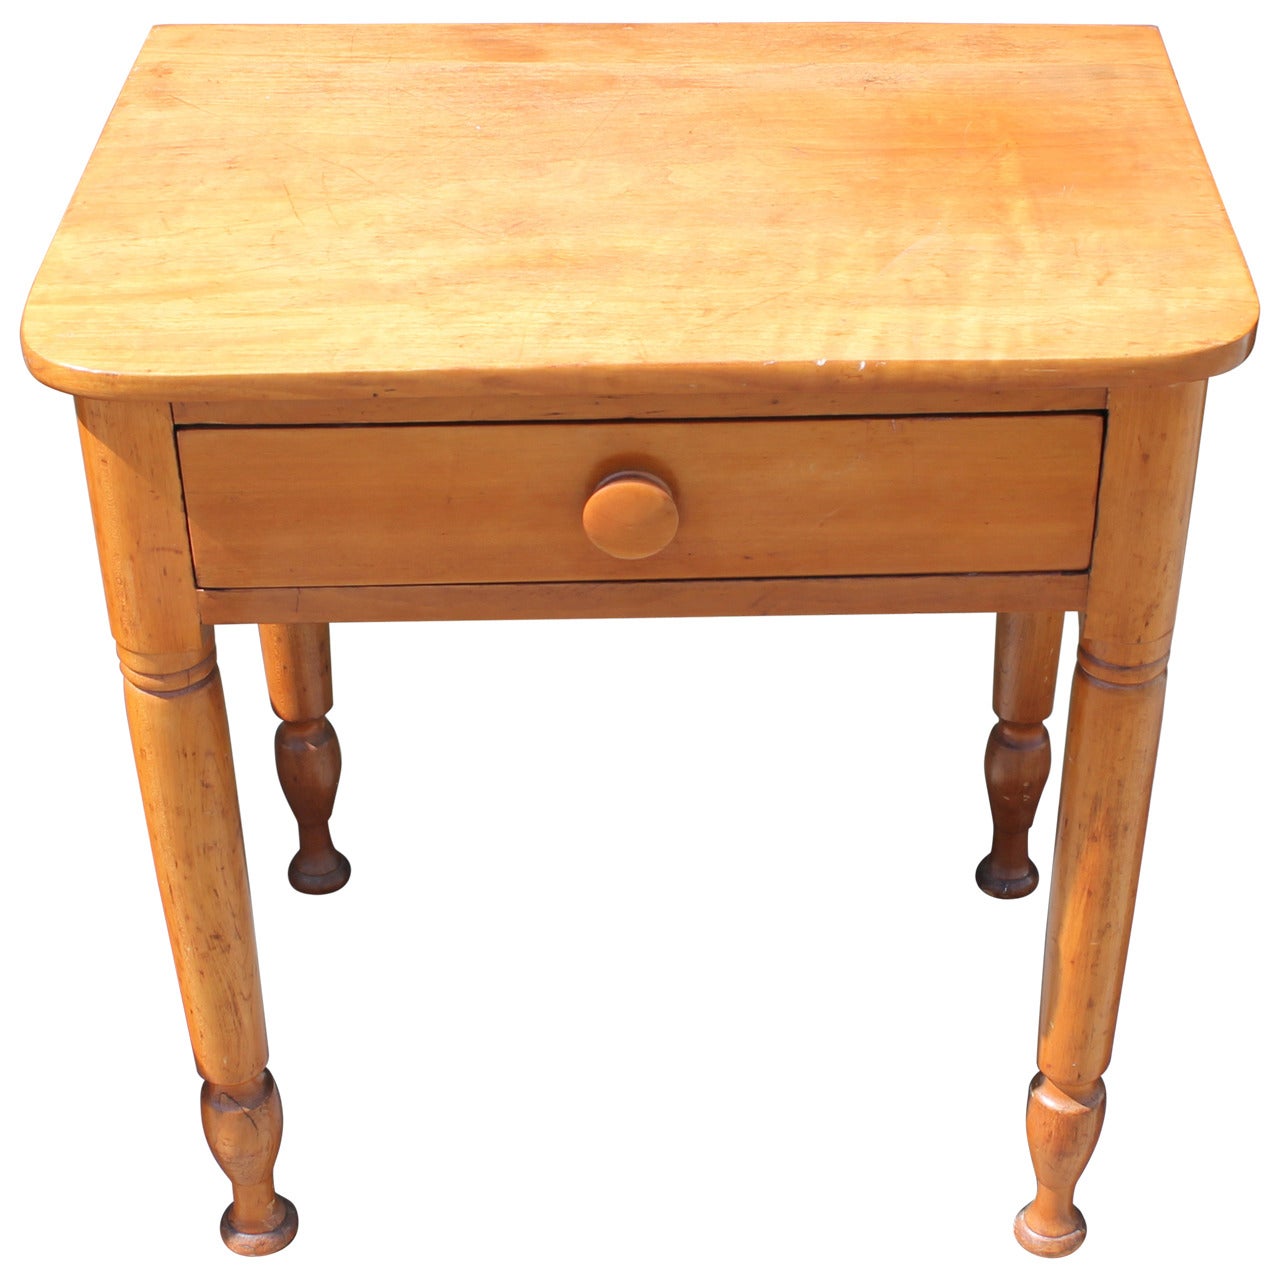 19th Century Early Maple End Table from Pennsylvania Farm House